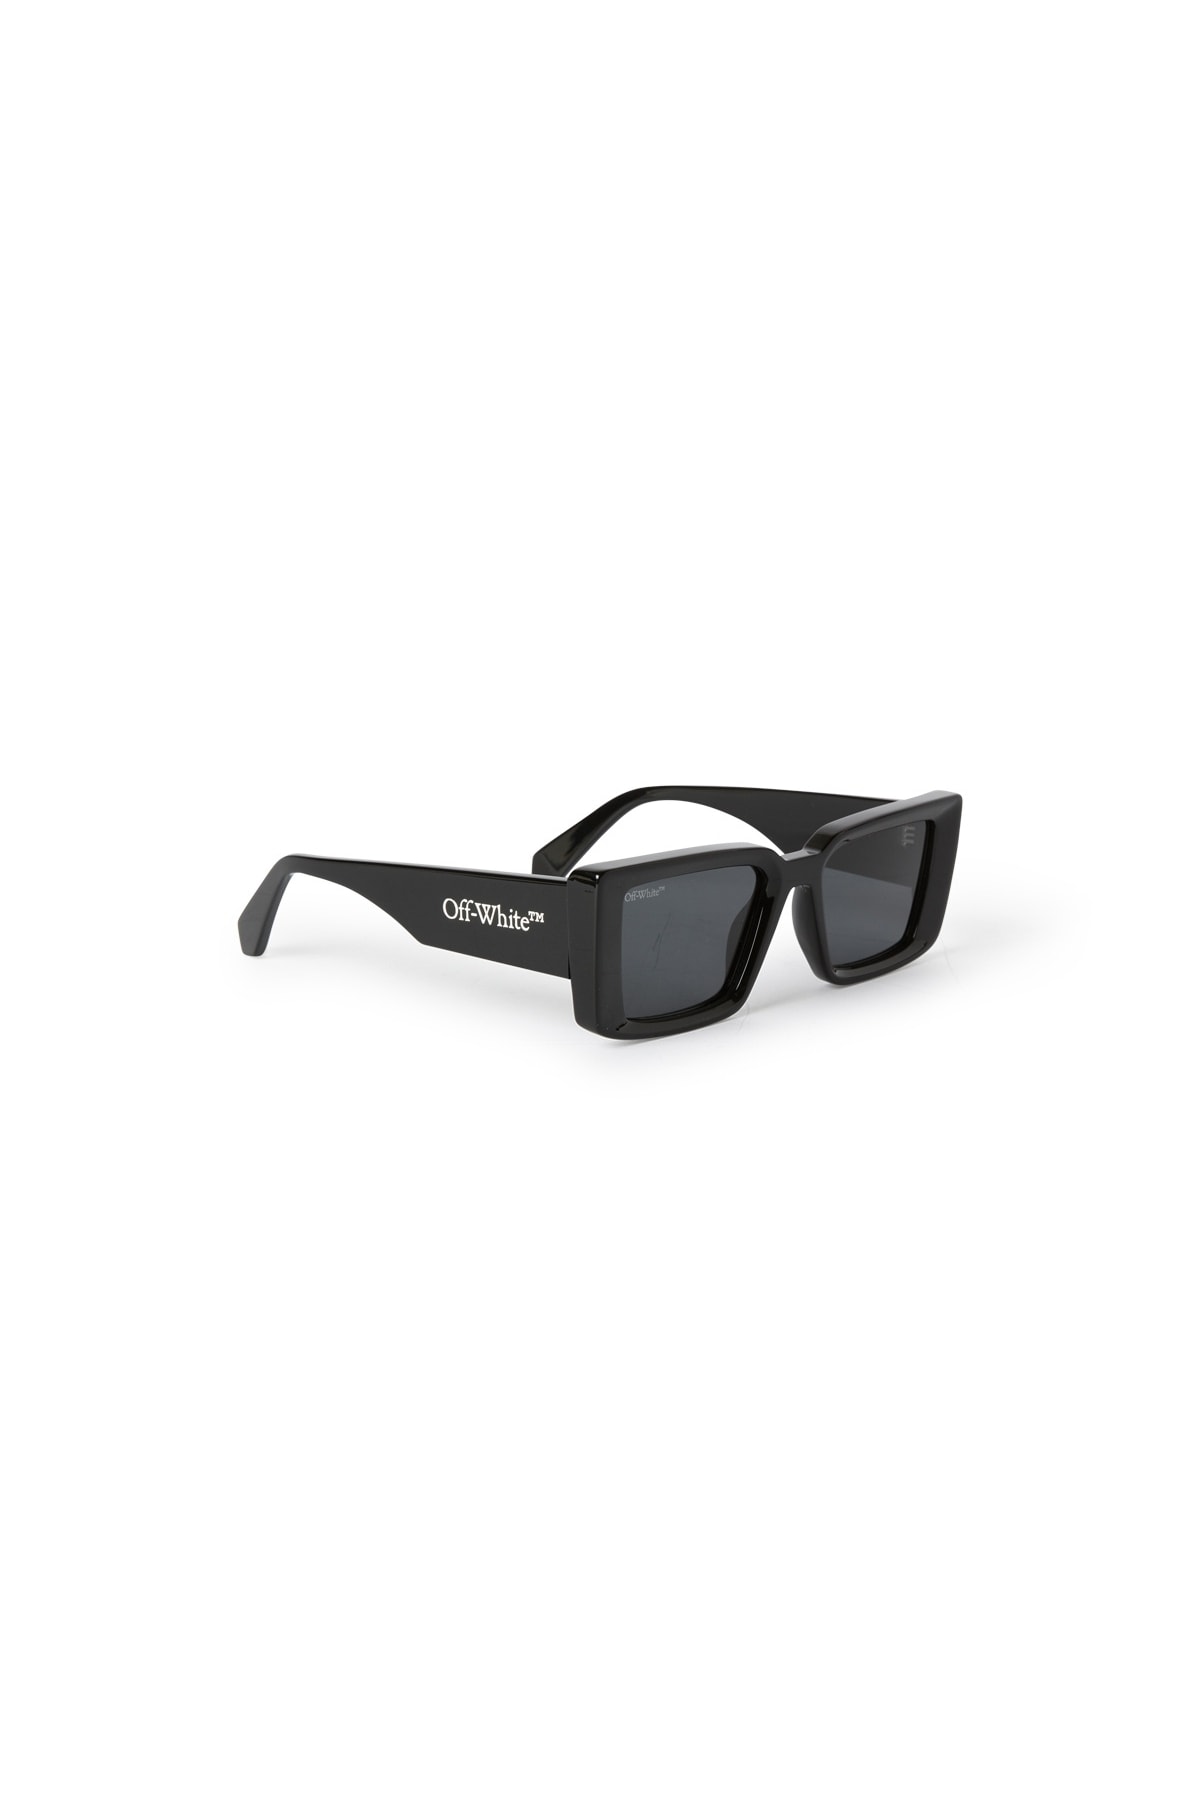 OFF-WHITE Savannah Sunglasses Black/Dark Grey (OERI064S23PLA0011007)